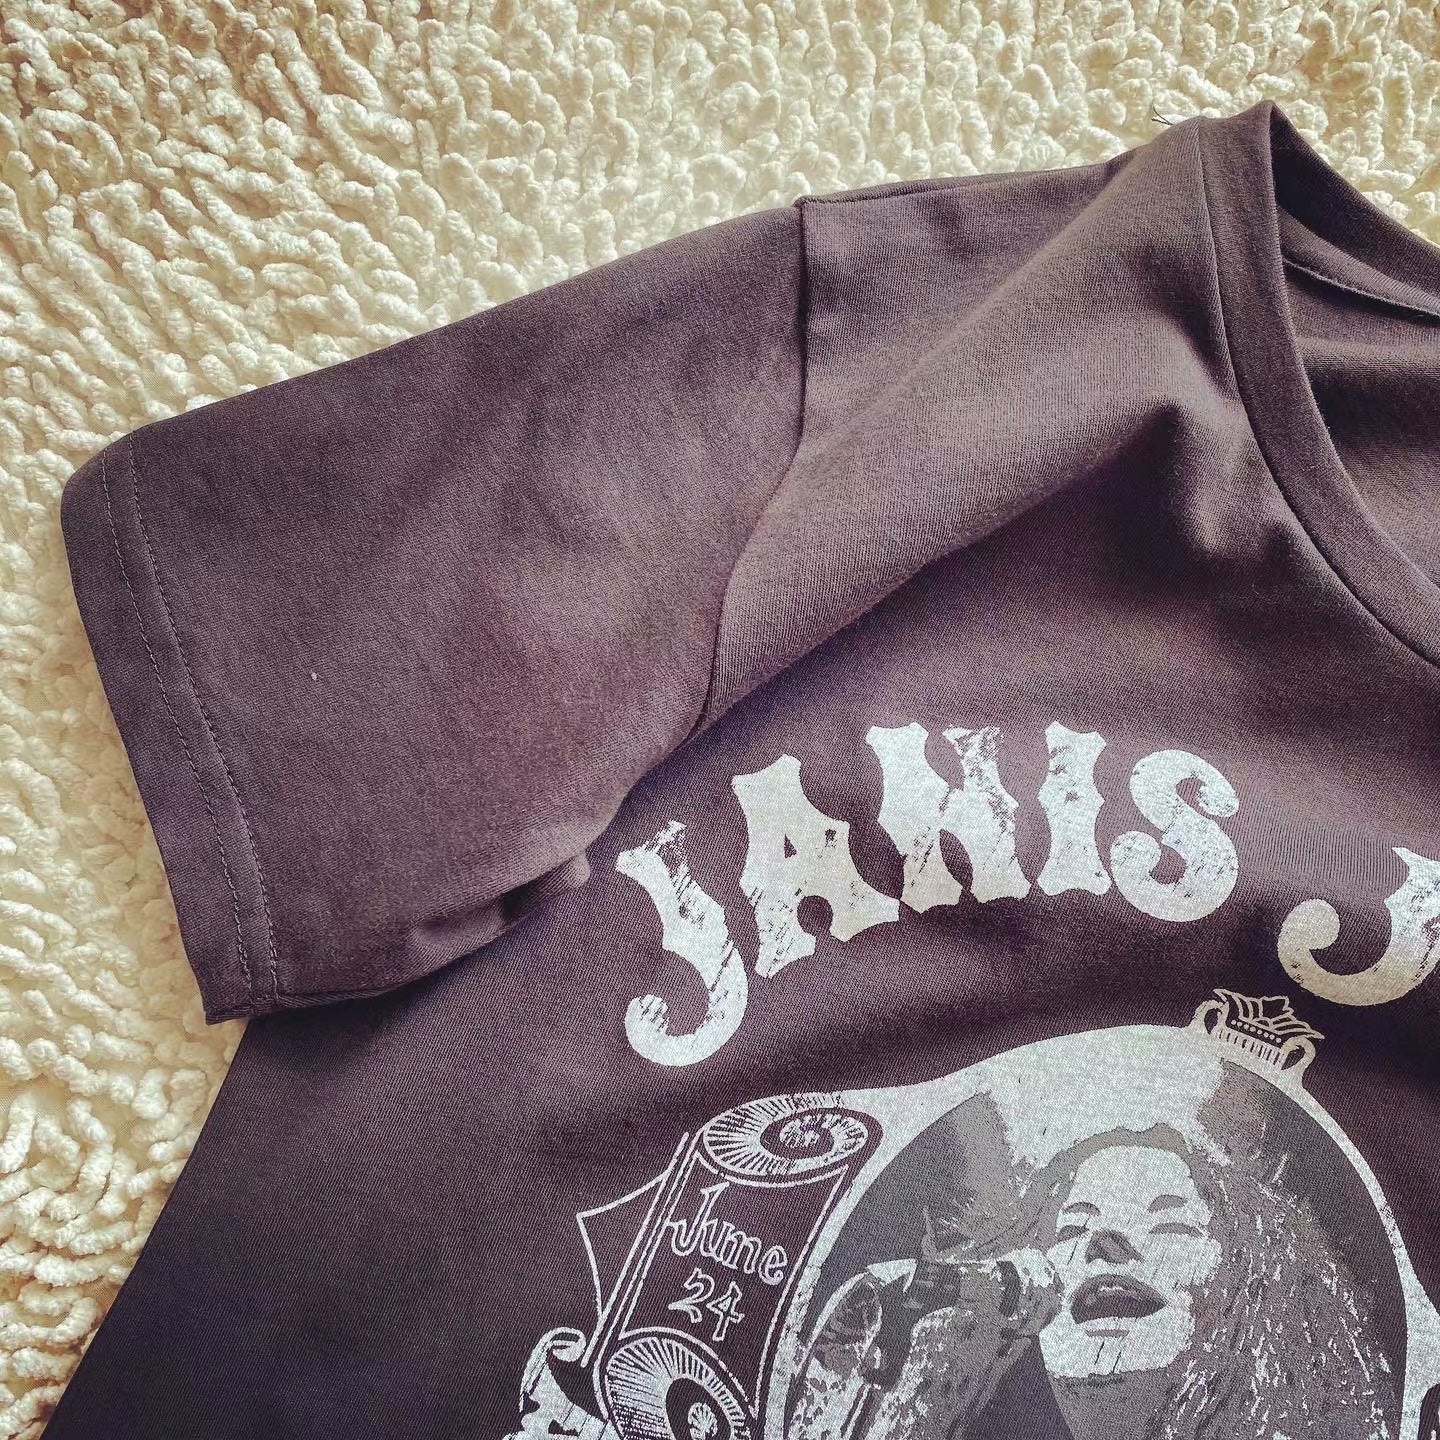 Janis Joplin Rock Chic Music T-shirt